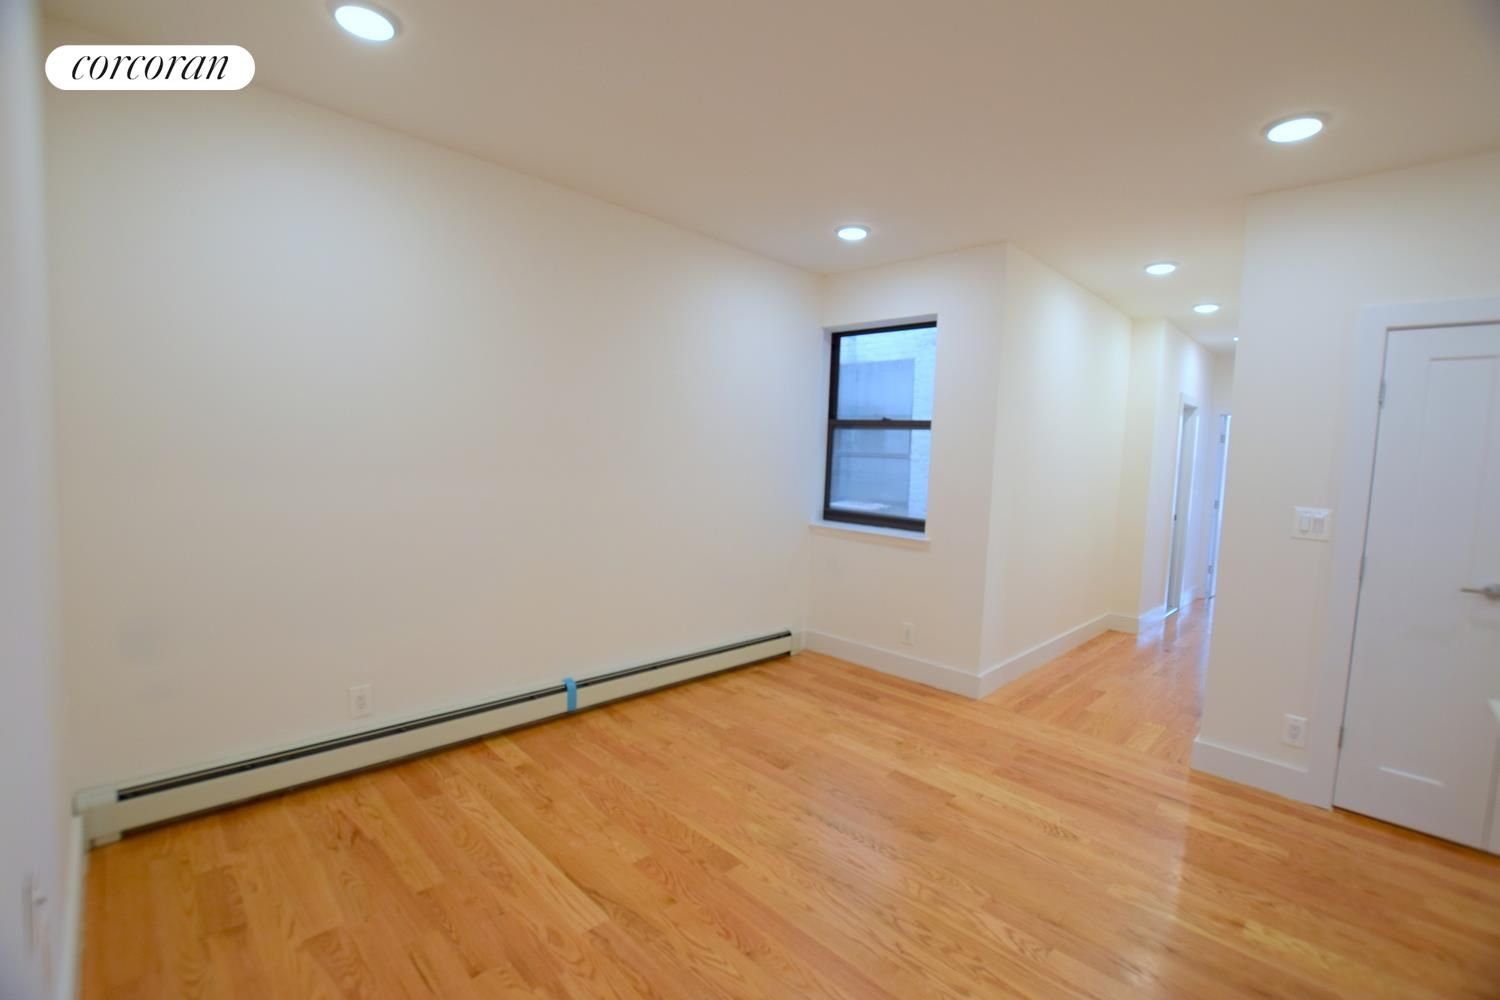 Real estate property located at 539-545 Lenox #4D, New York, New York City, NY